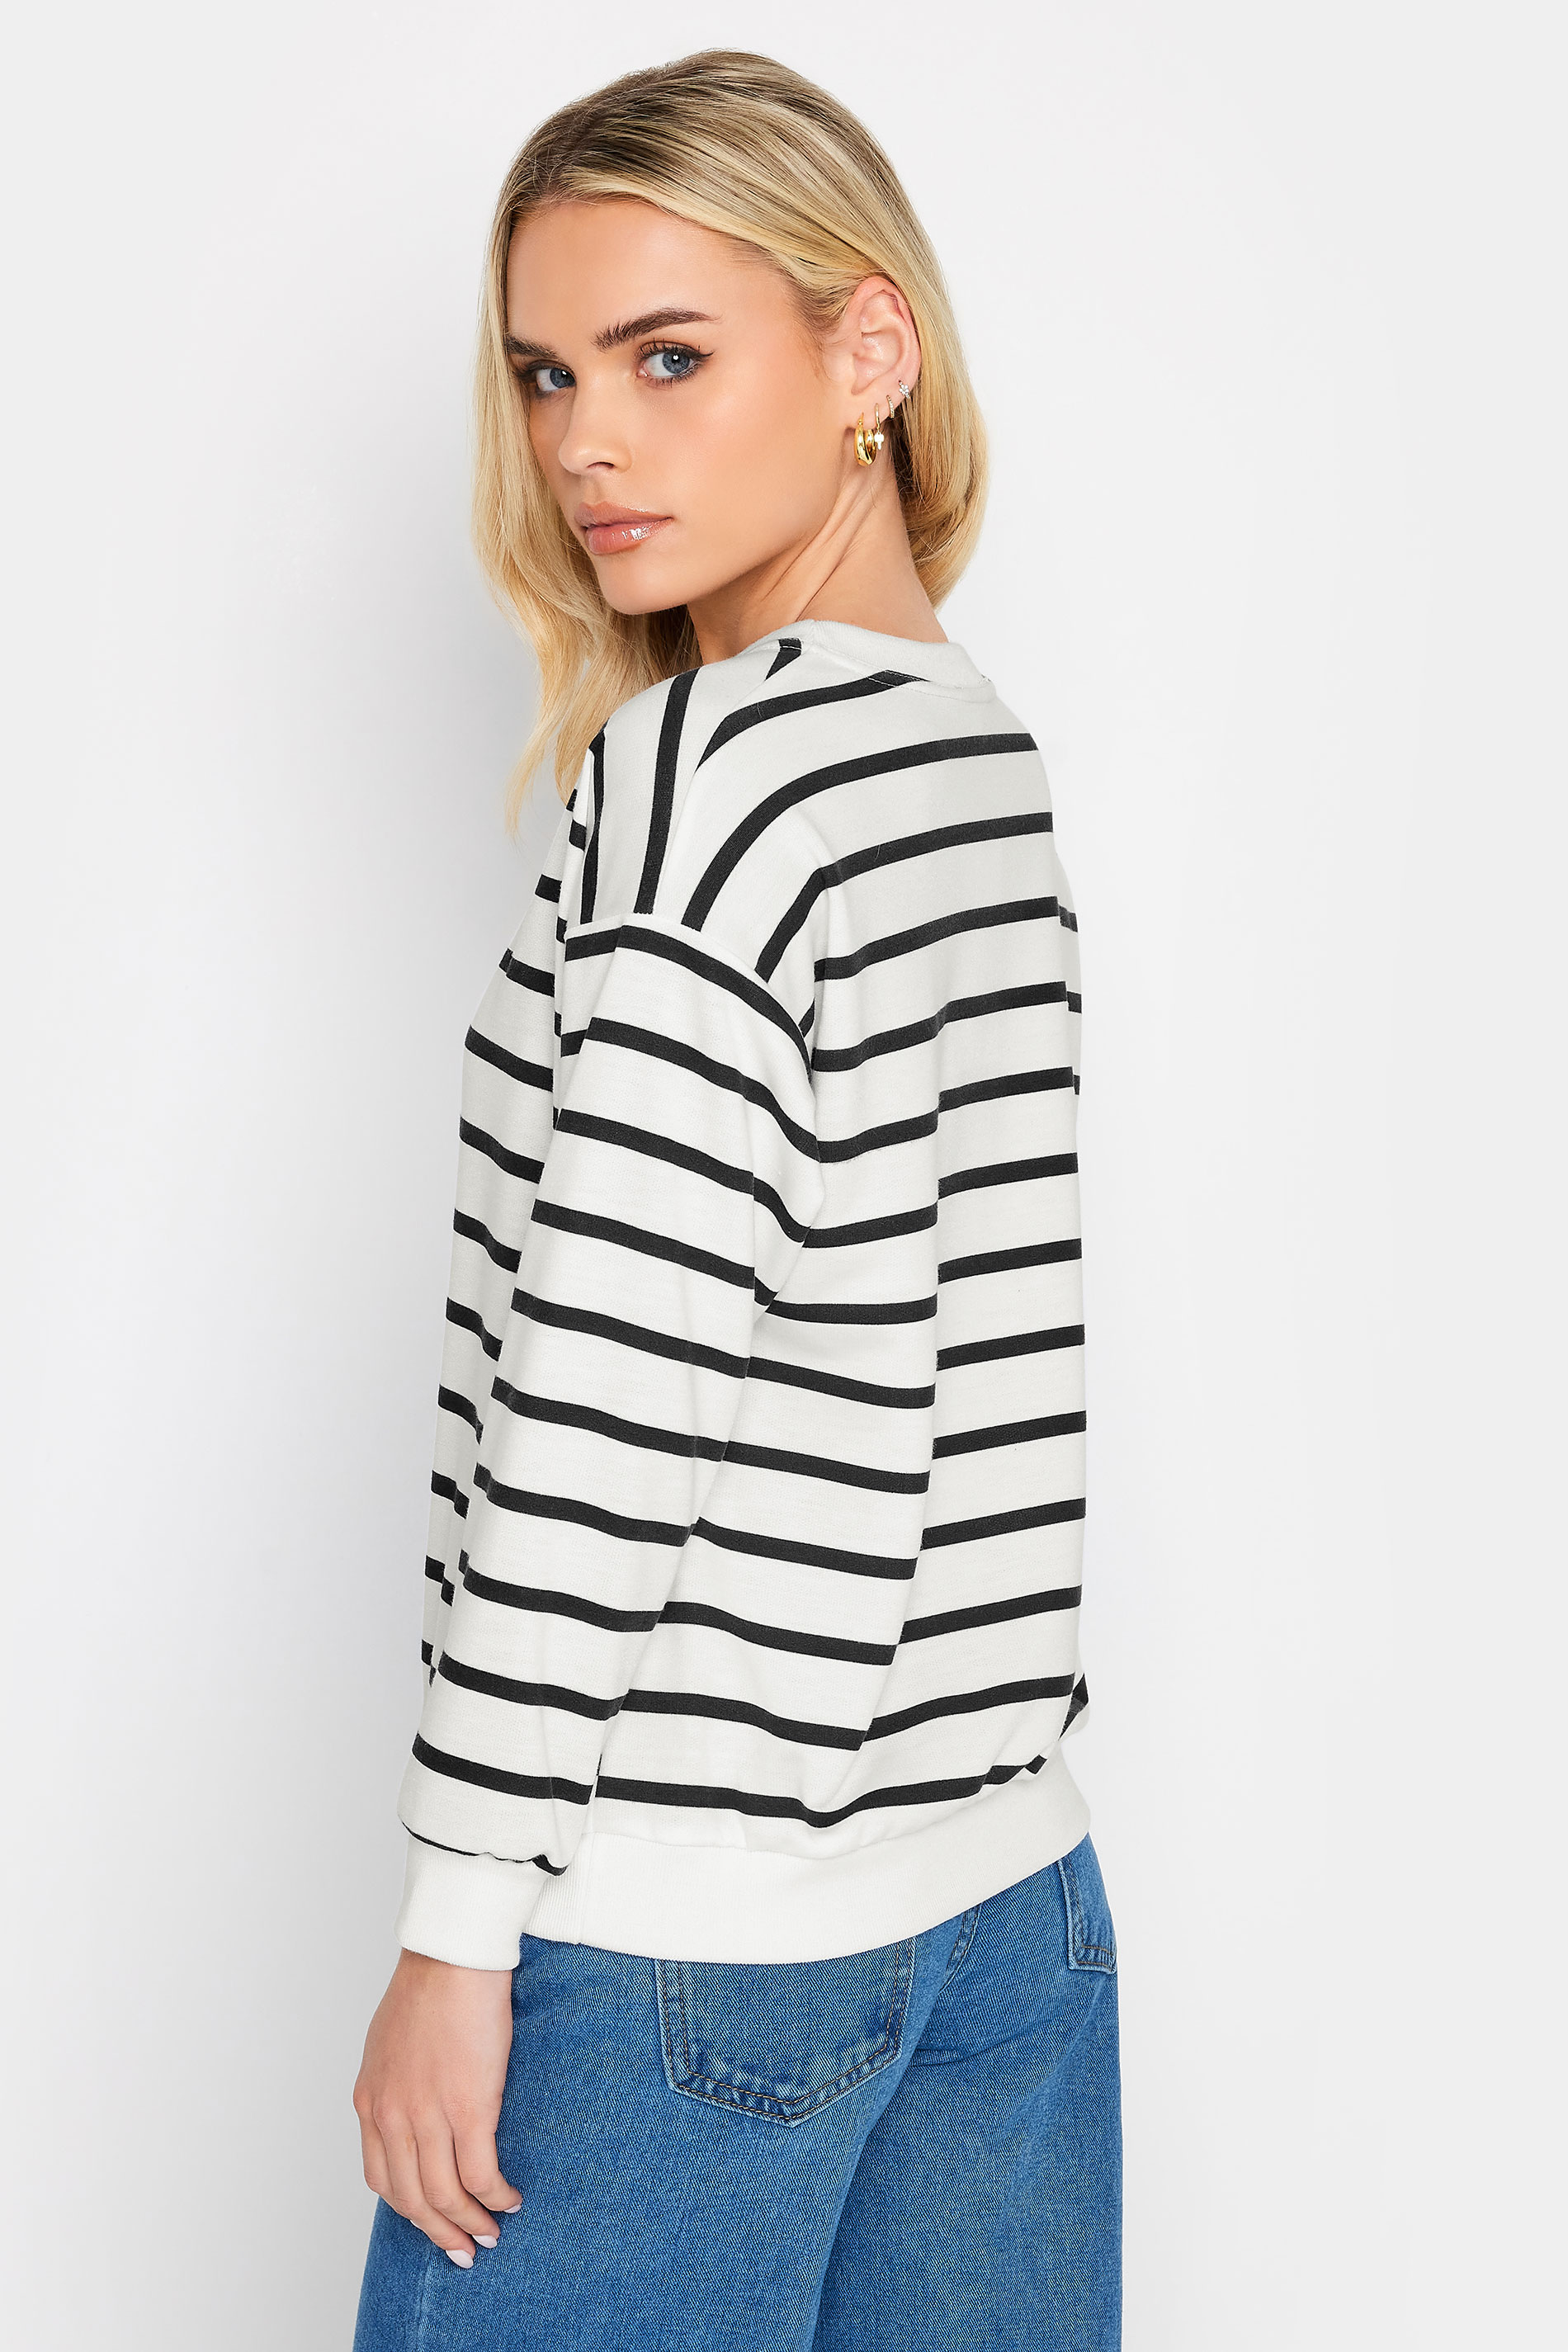 PixieGirl Petite White & Black Stripe Sweatshirt | PixieGirl  3